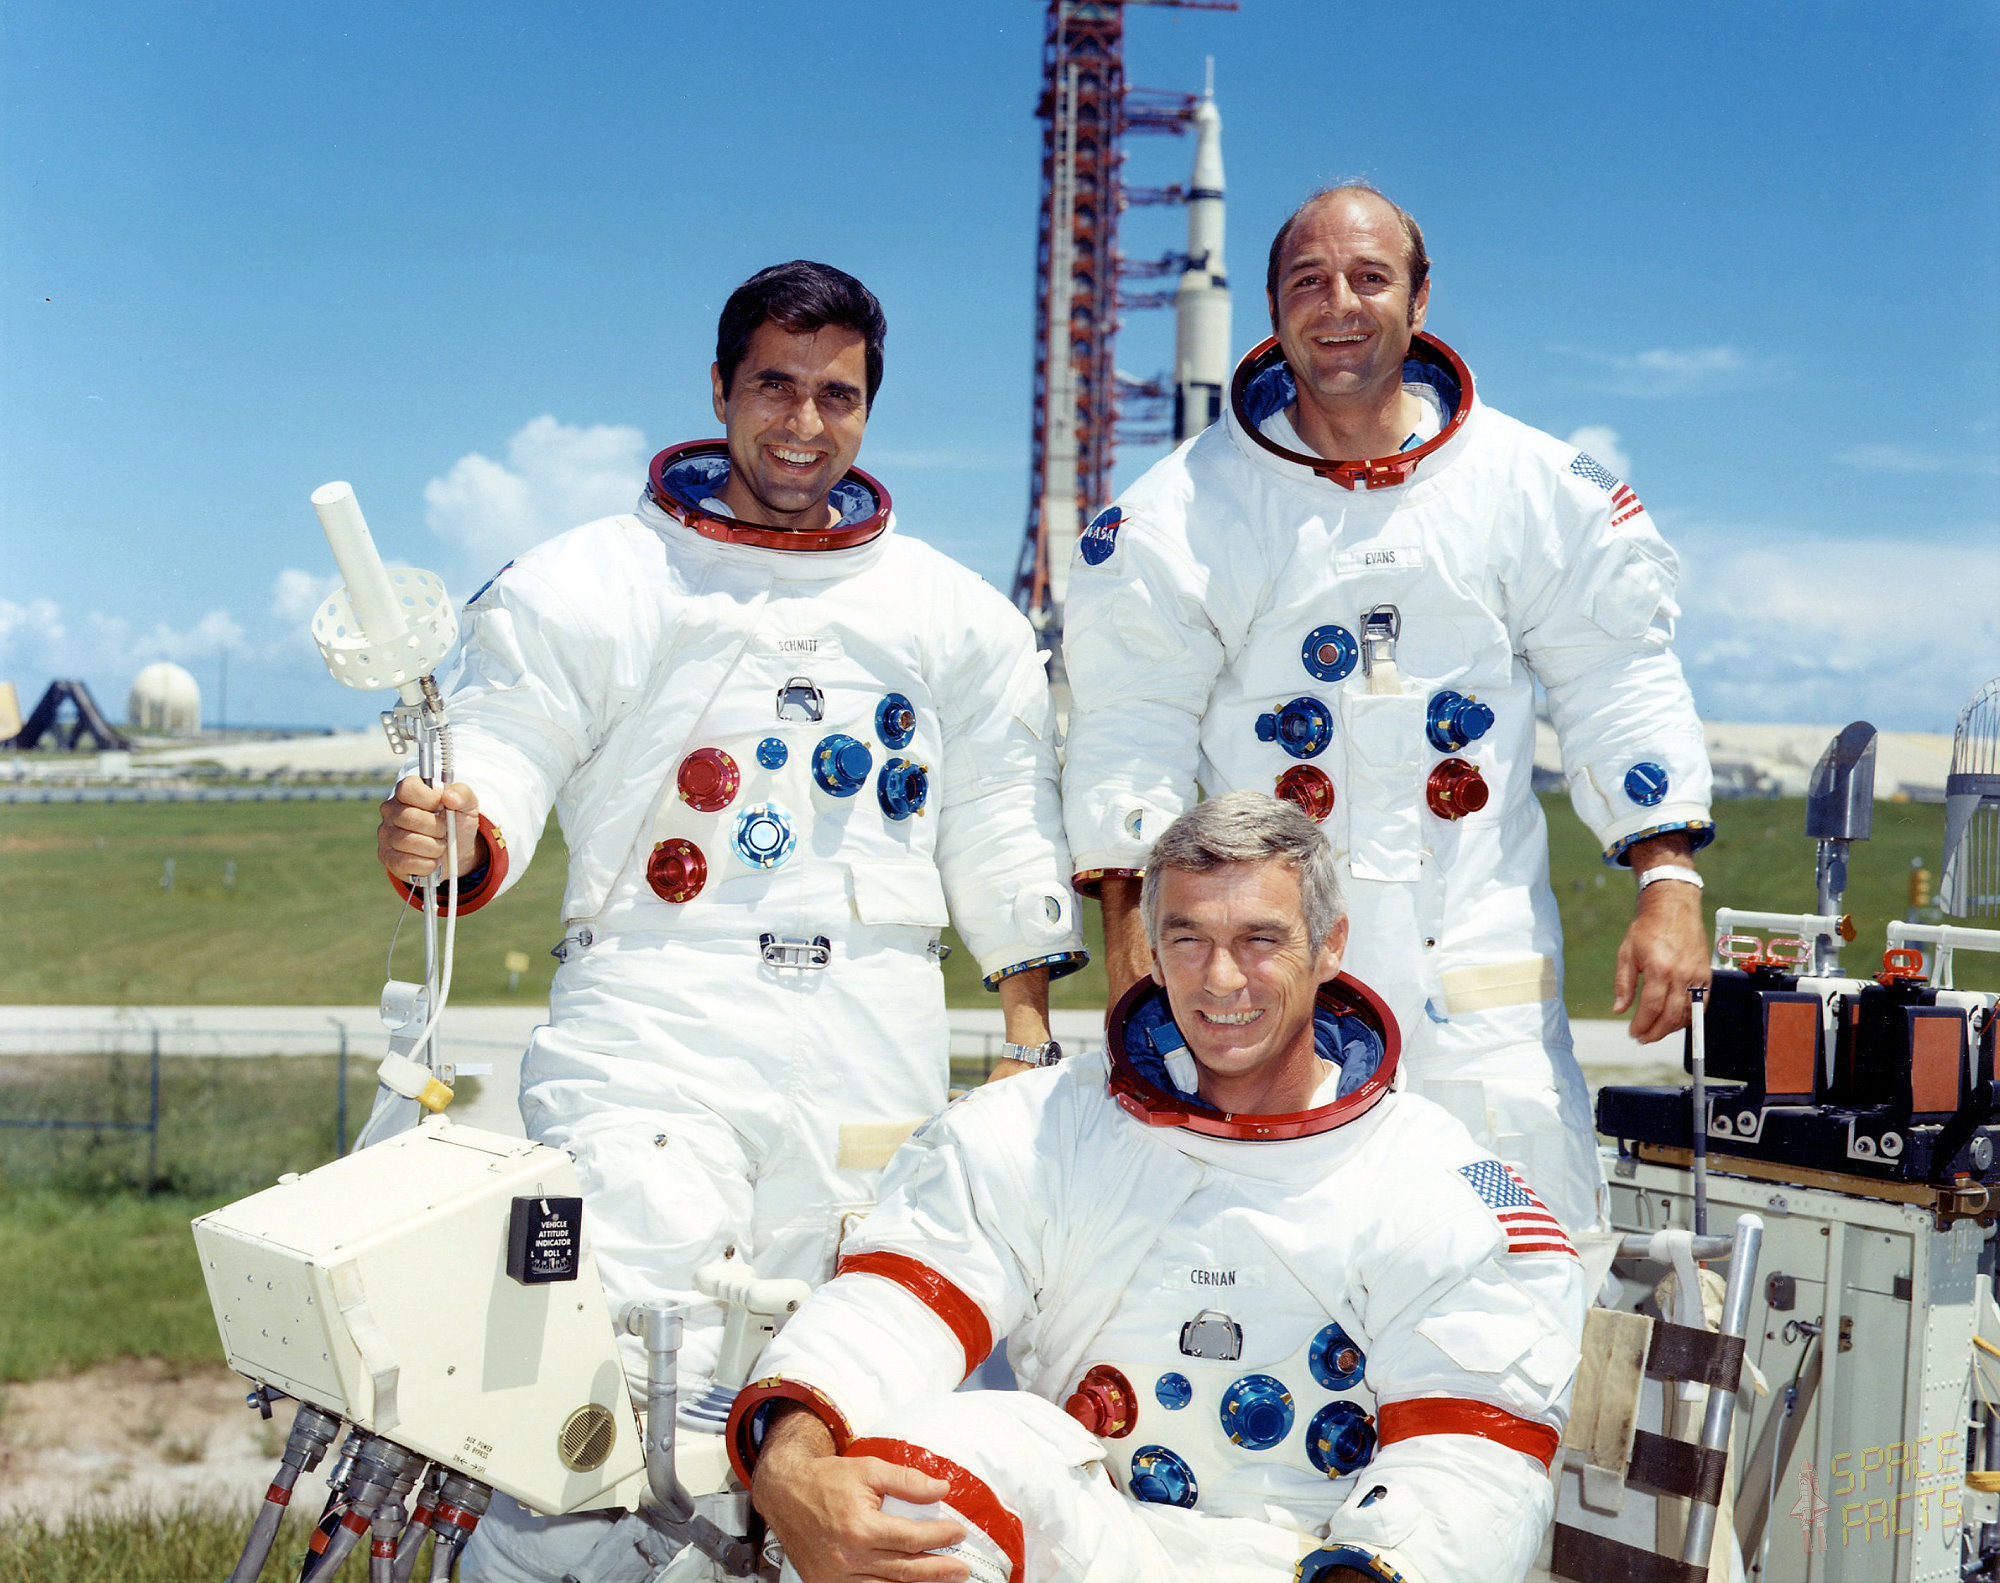 Jack Schmitt's Apollo 17 Suit